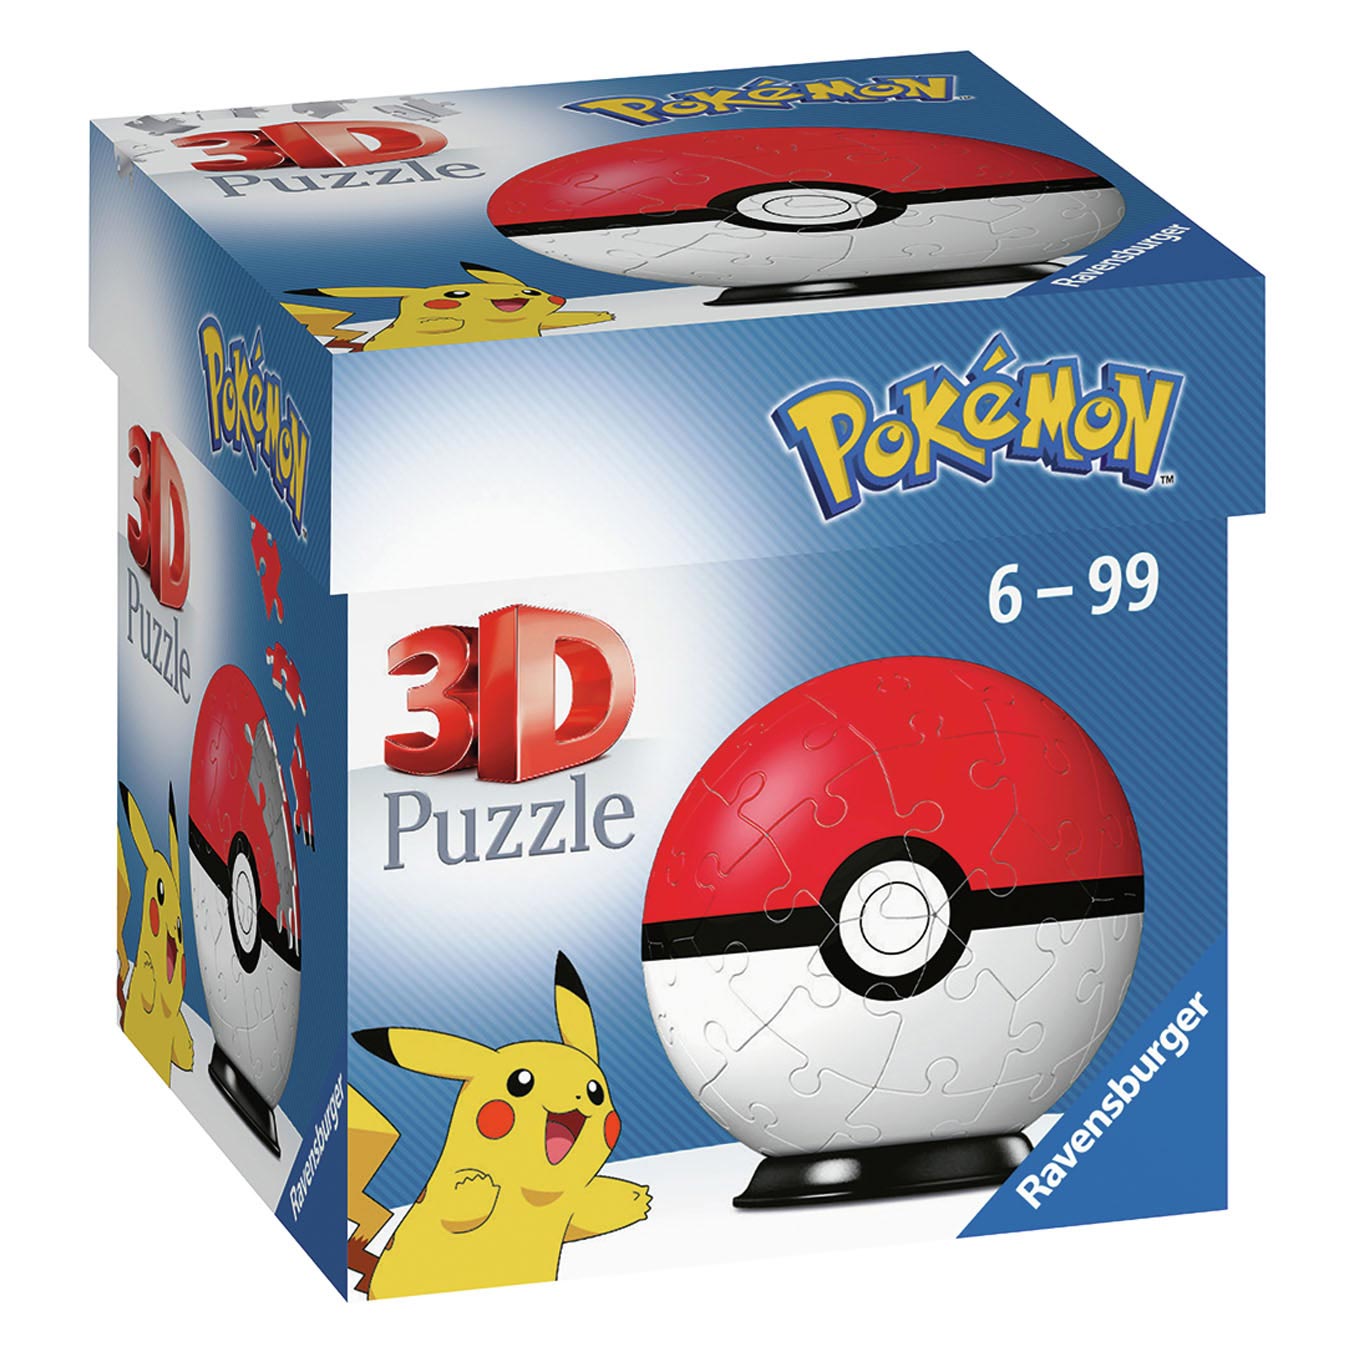 Pokémon Pokeball 3D-Puzzle, 54 Teile.